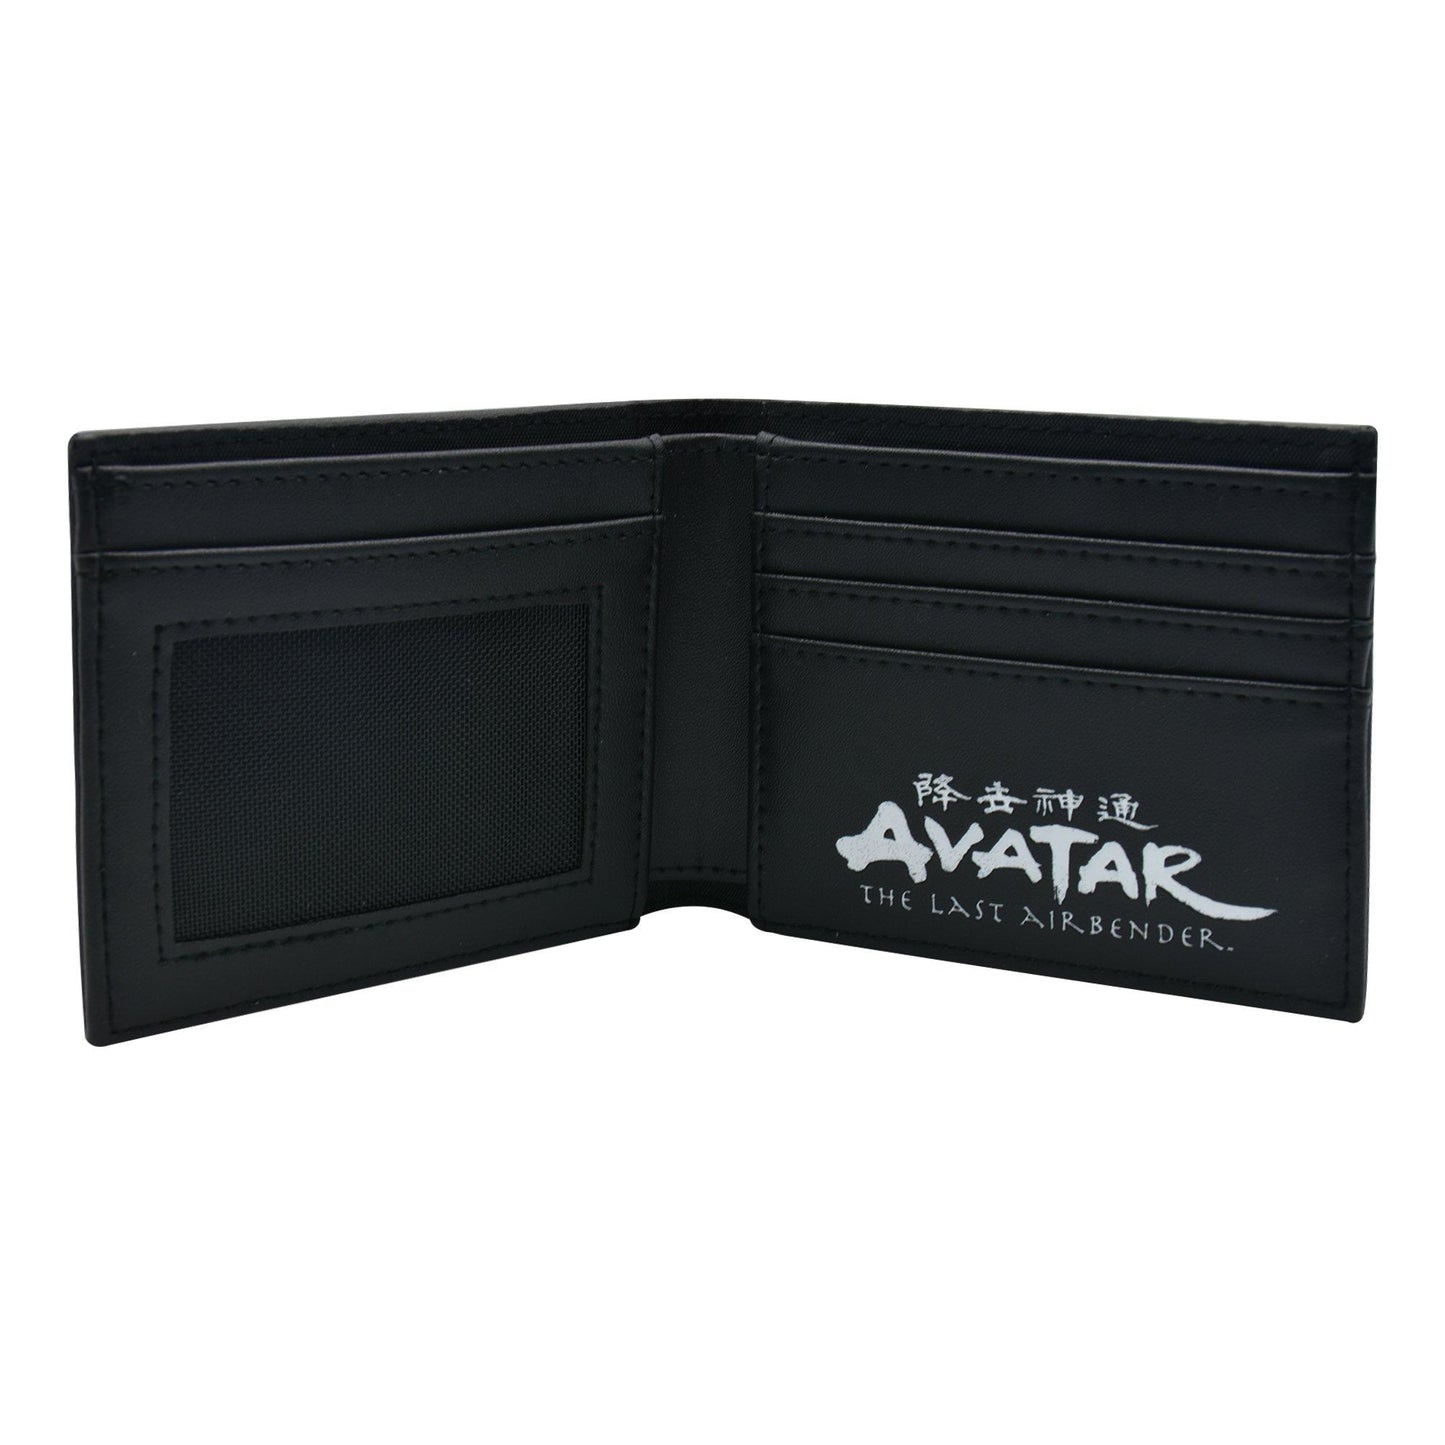 Wallet de Avatar: The Last Airbender